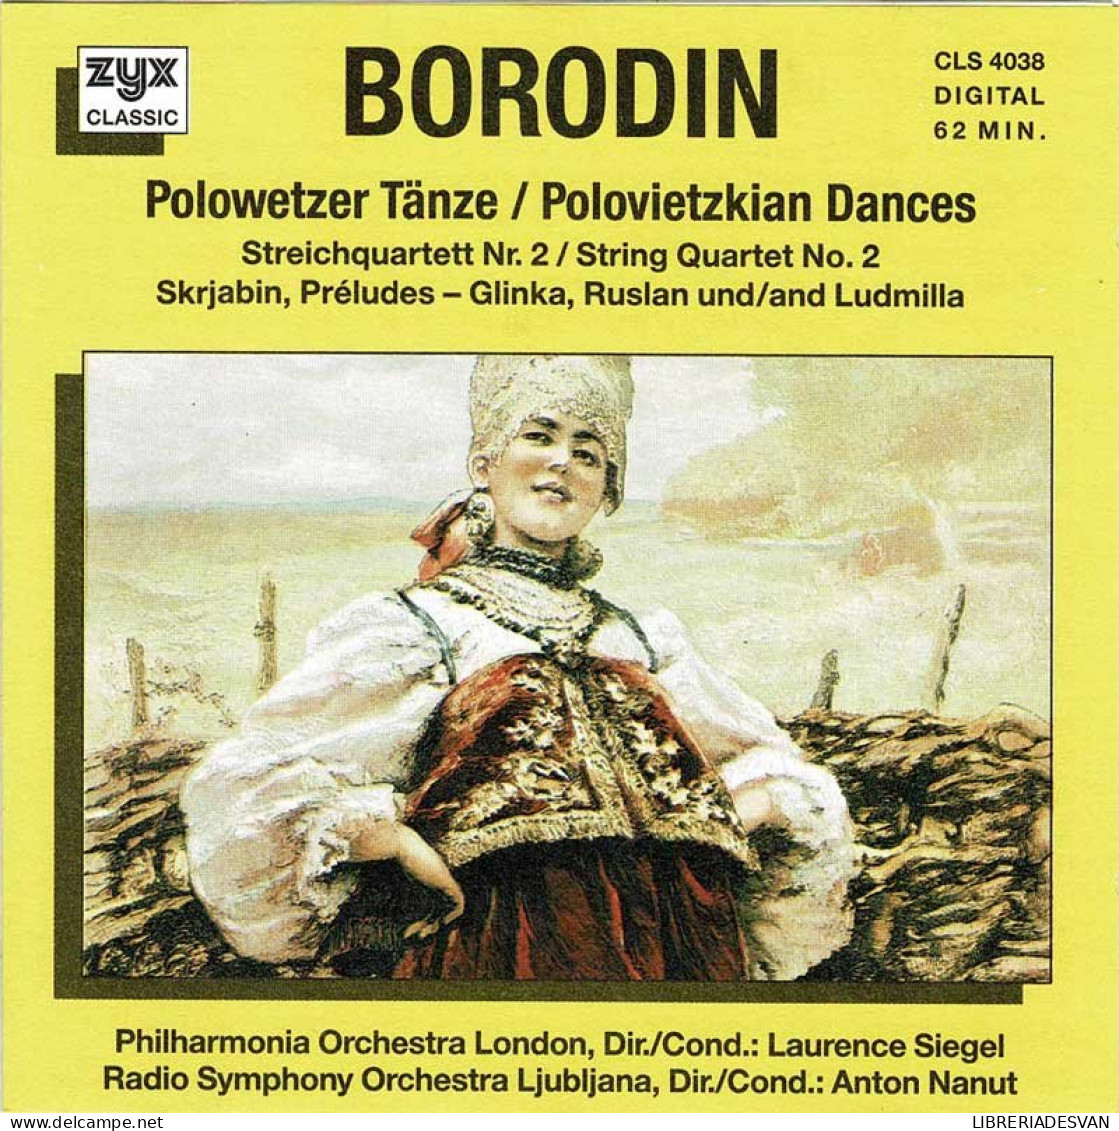 Borodin - Polovietzkian Dances. CD - Clásica